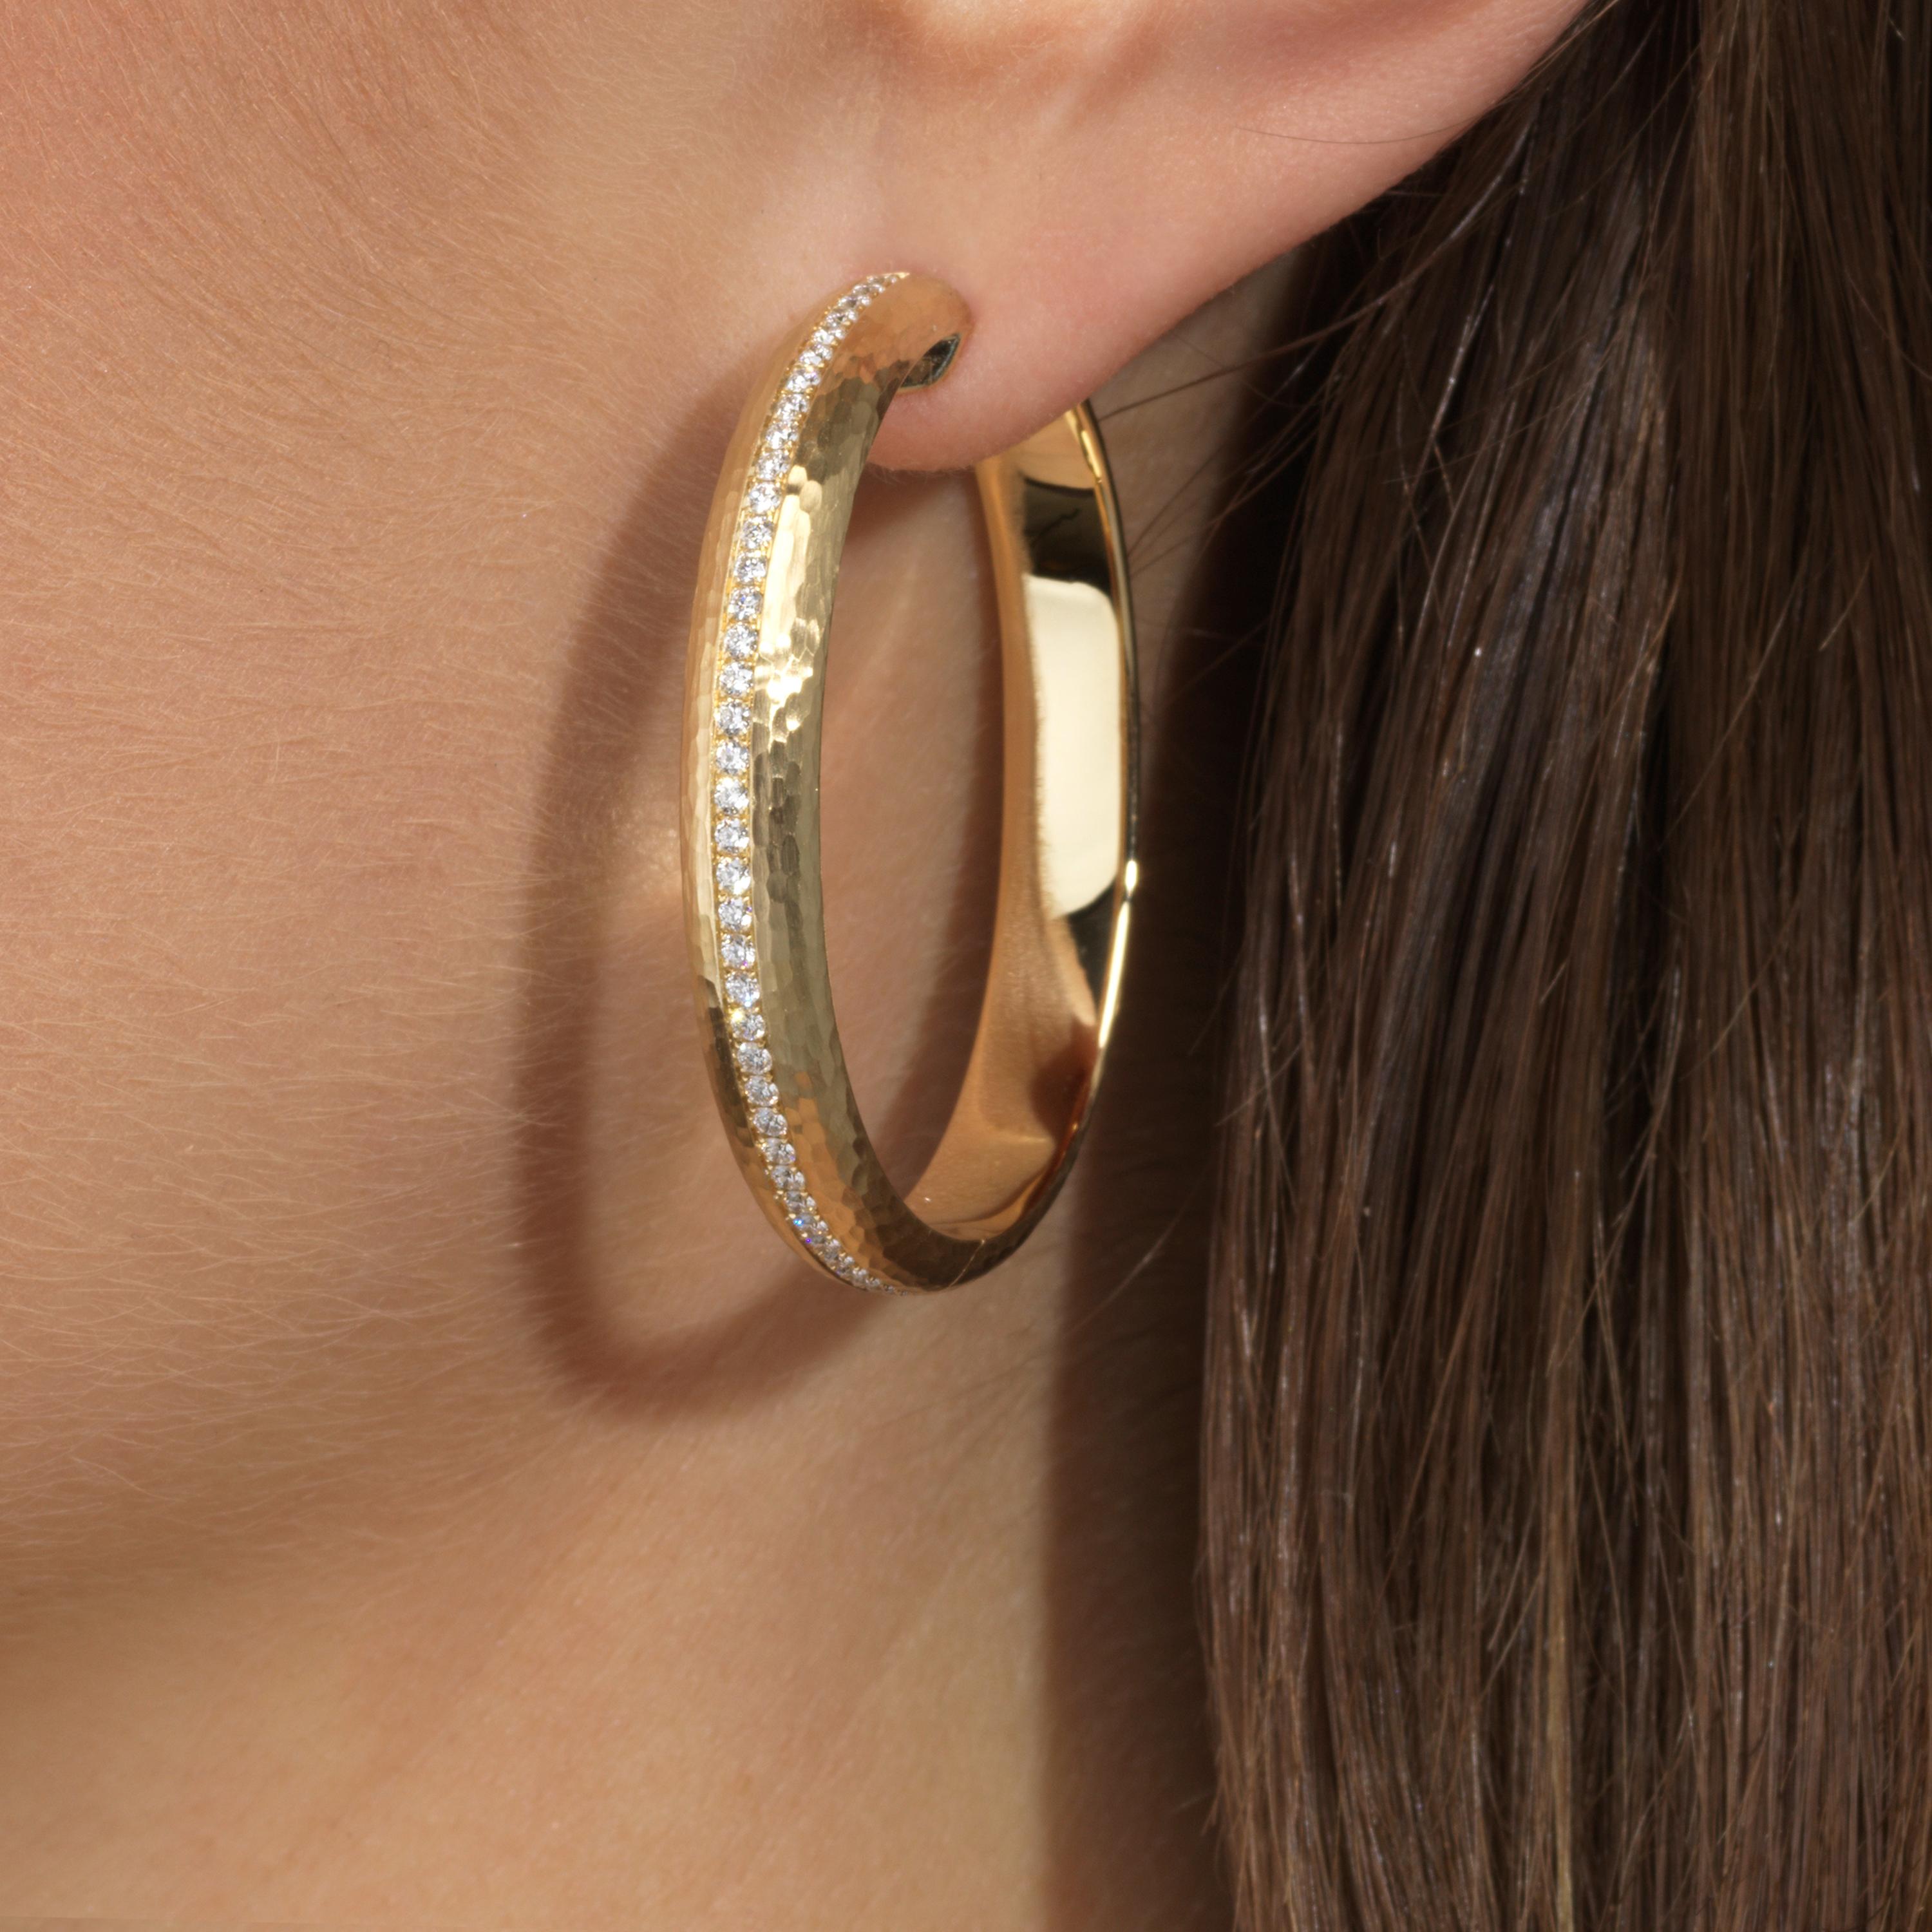 white gold hoop earrings